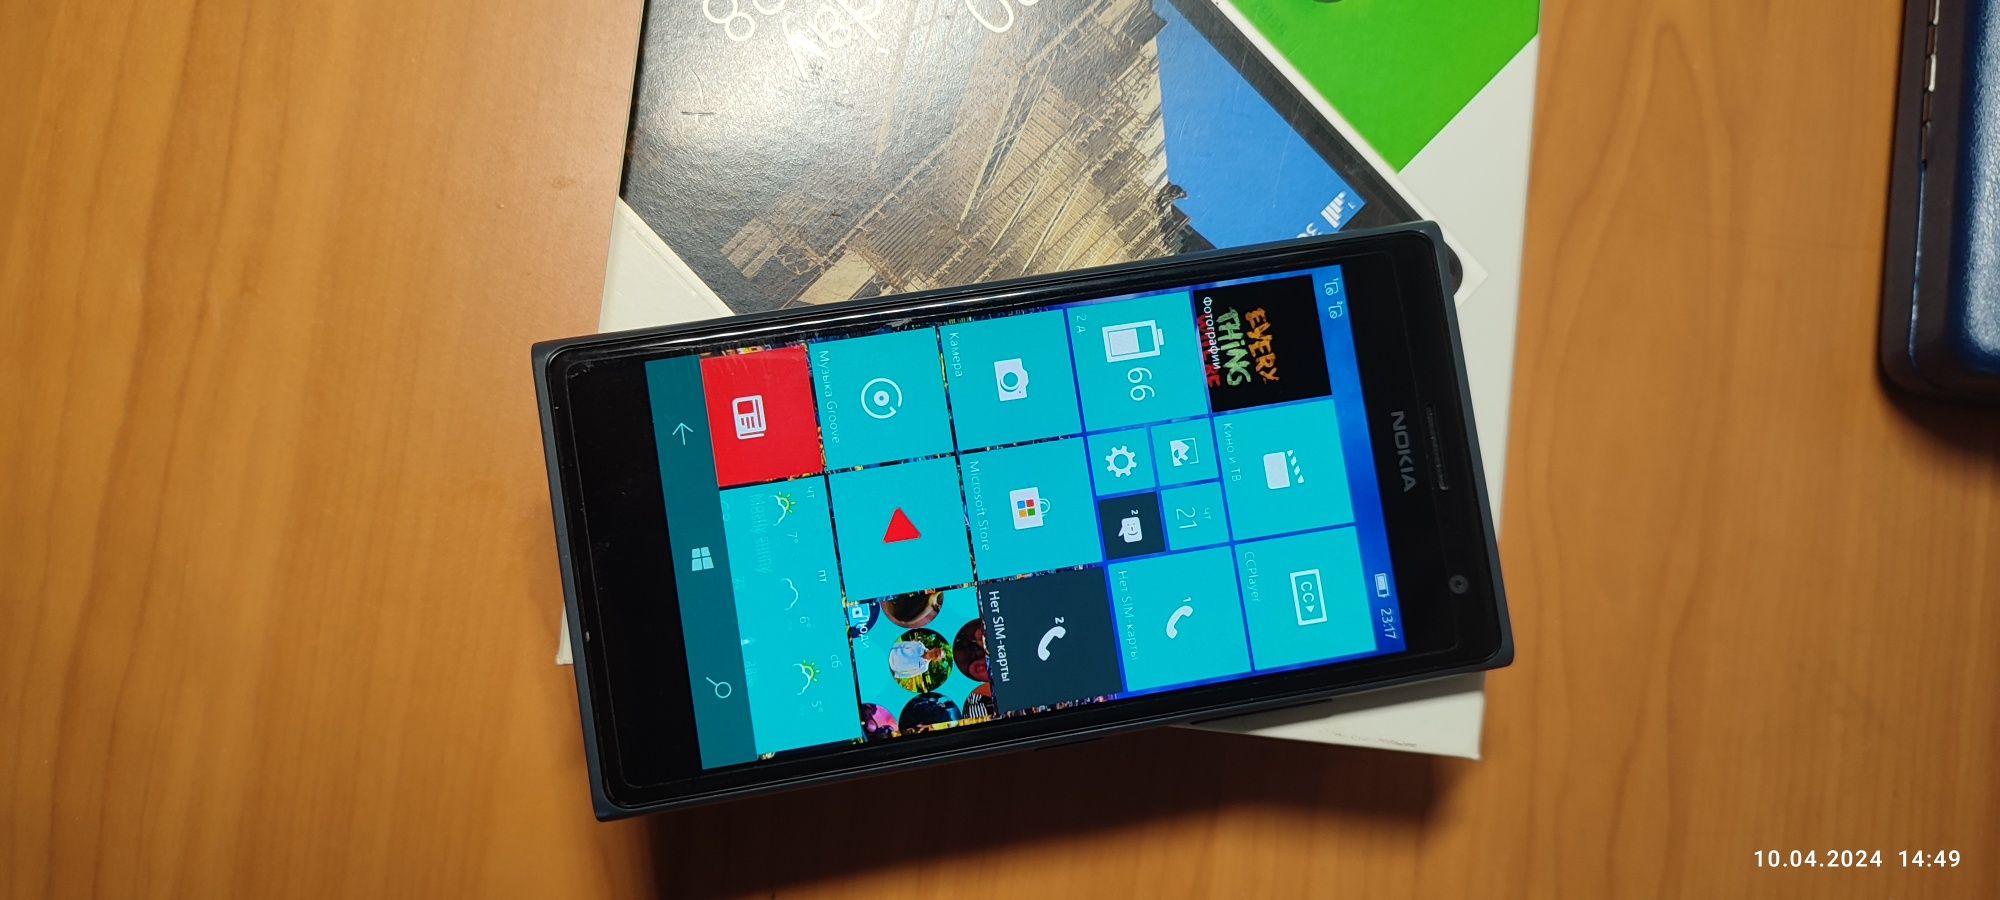 Nokia Lumia 730 смартфон.